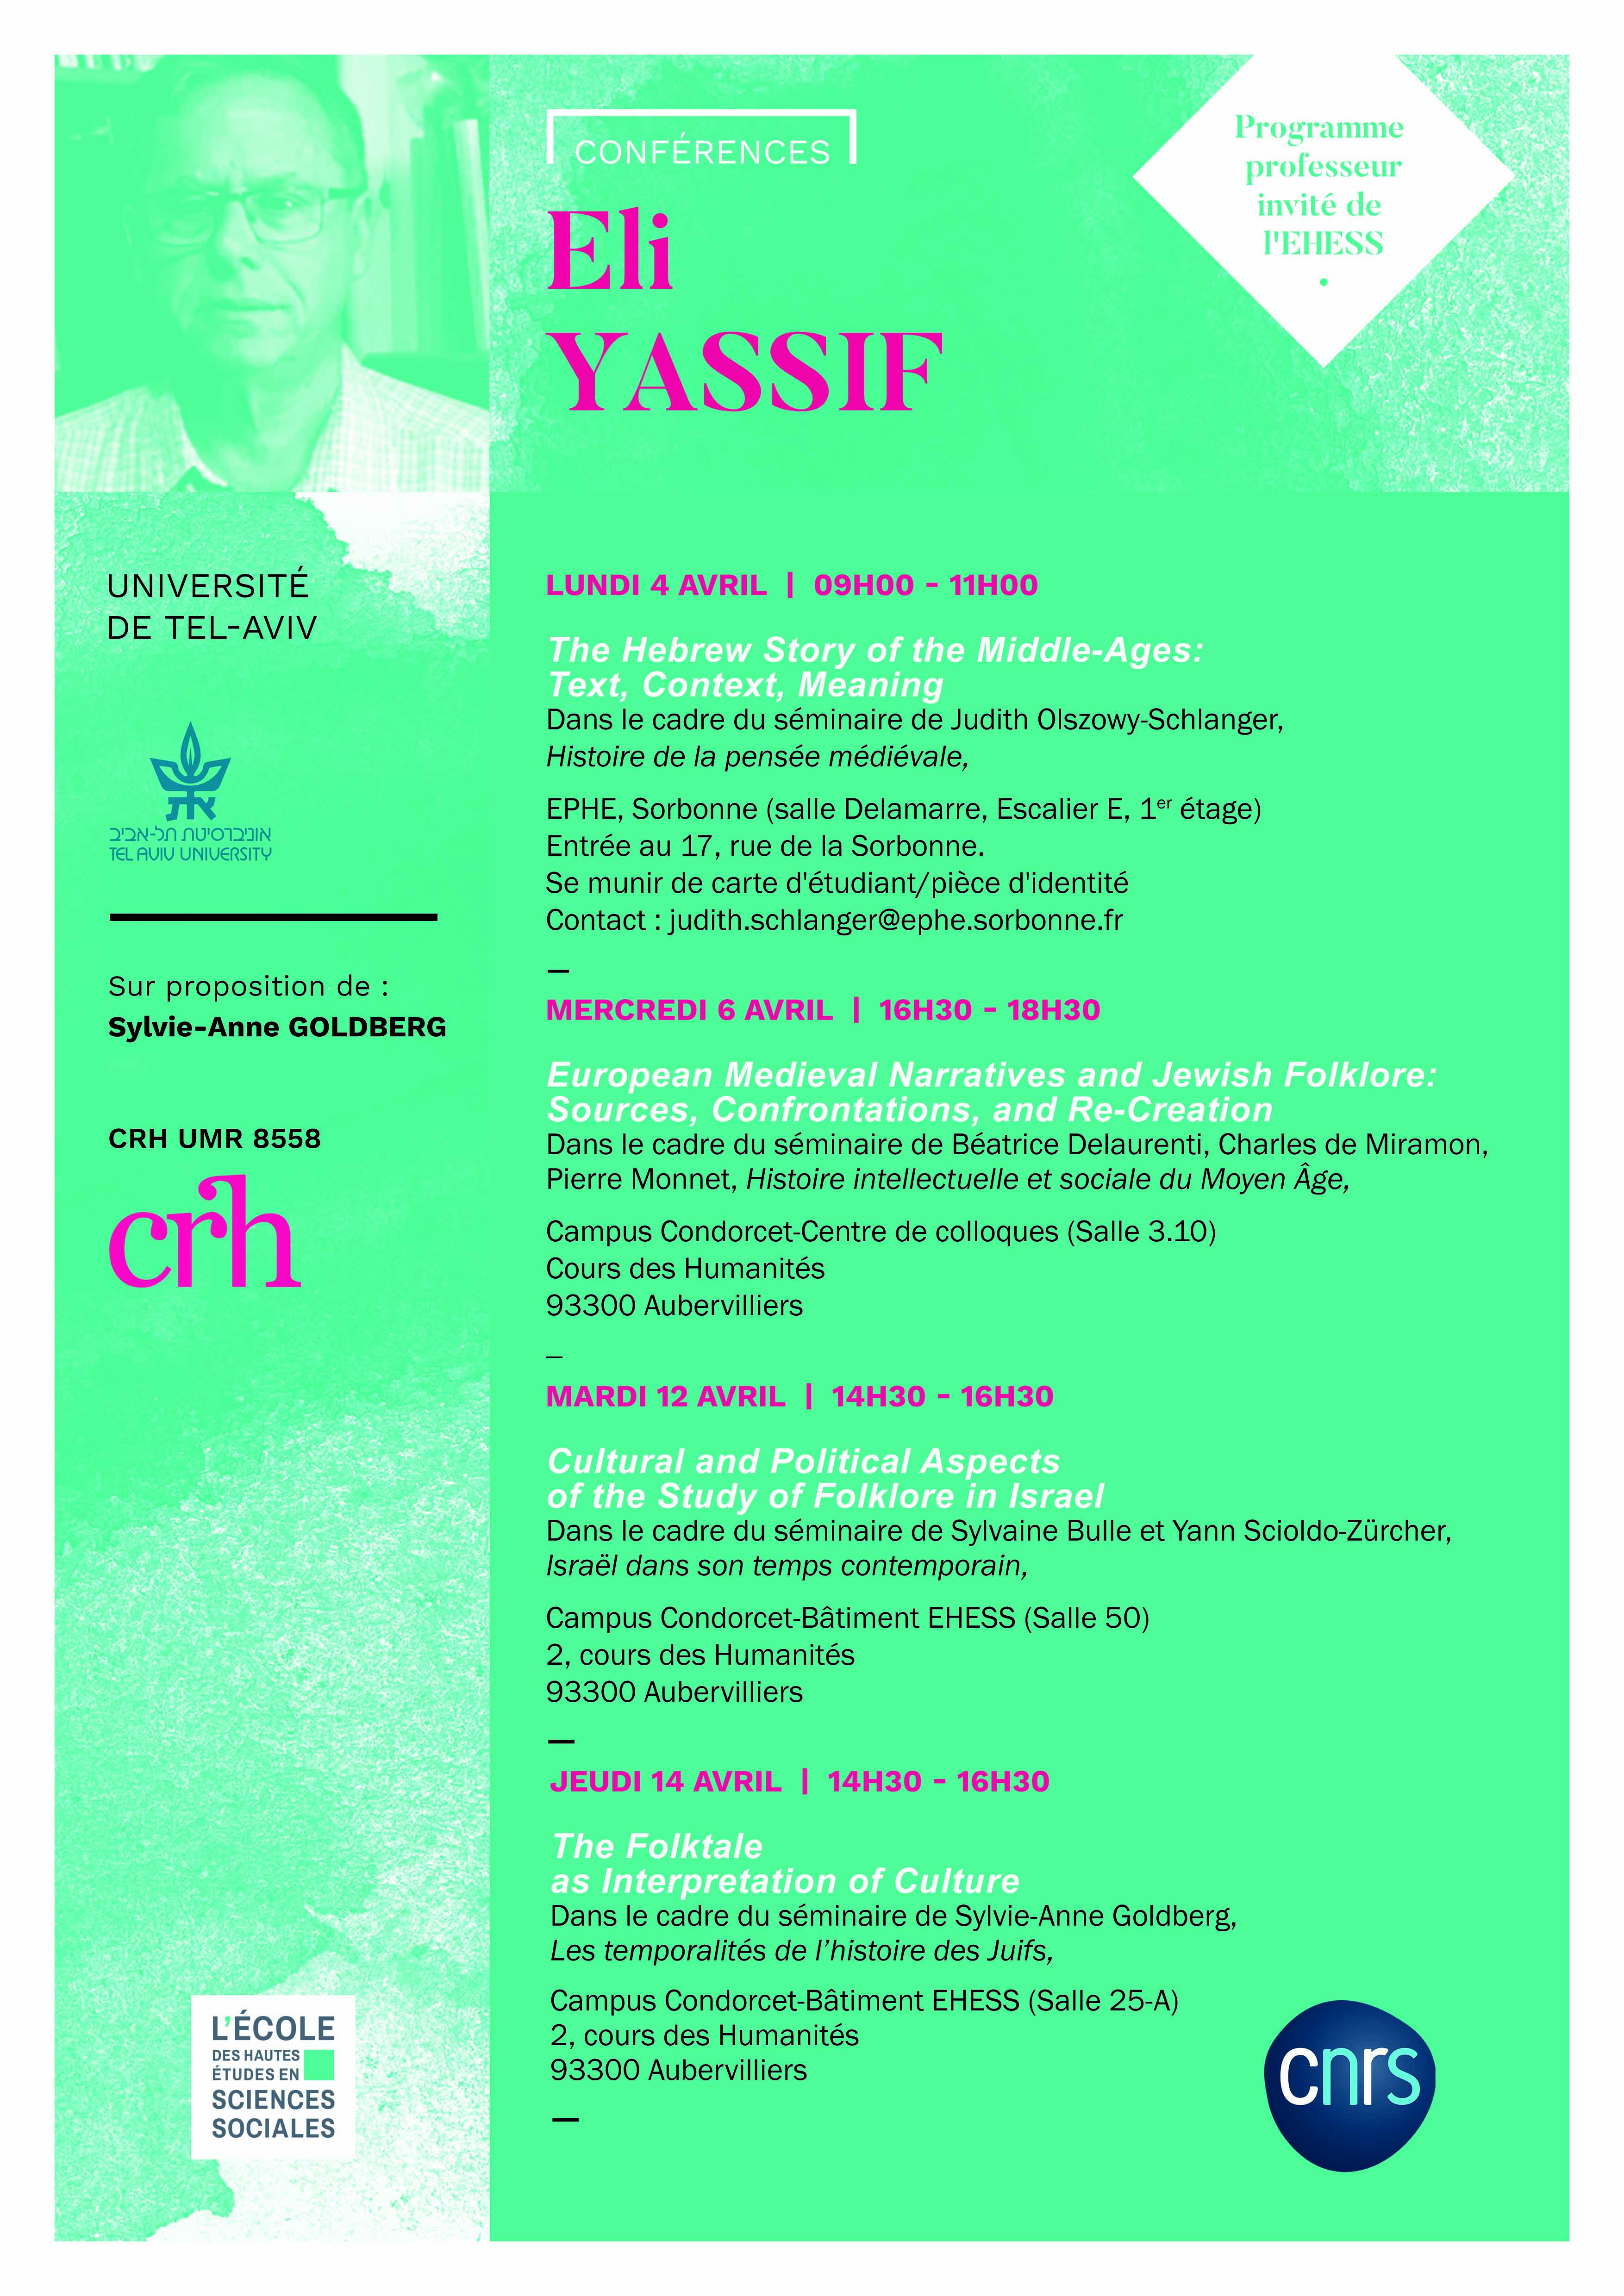 Conférences d'Eli Yassif (Tel Aviv University)